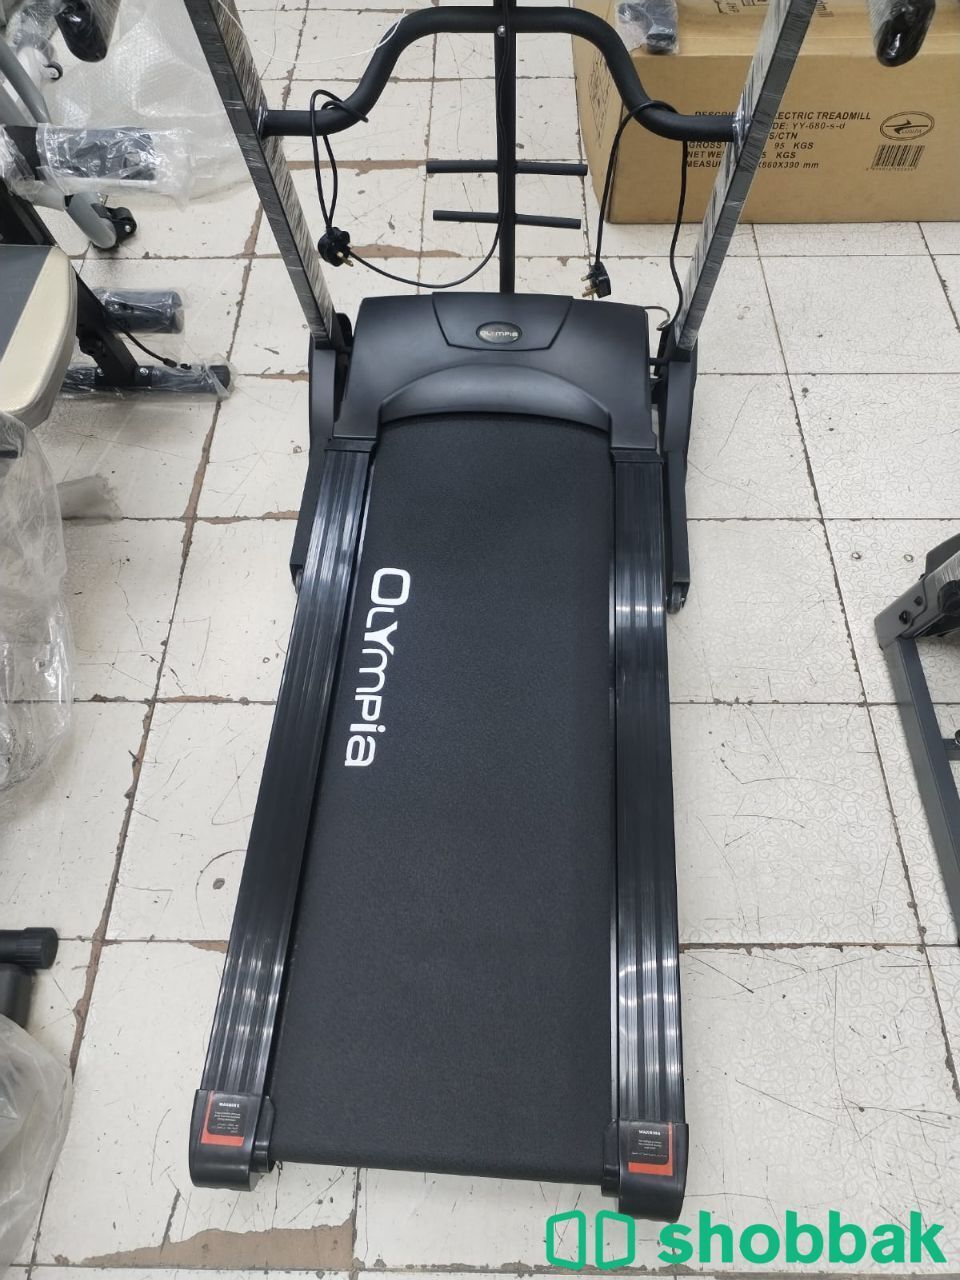 Treadmill for sales  Shobbak Saudi Arabia